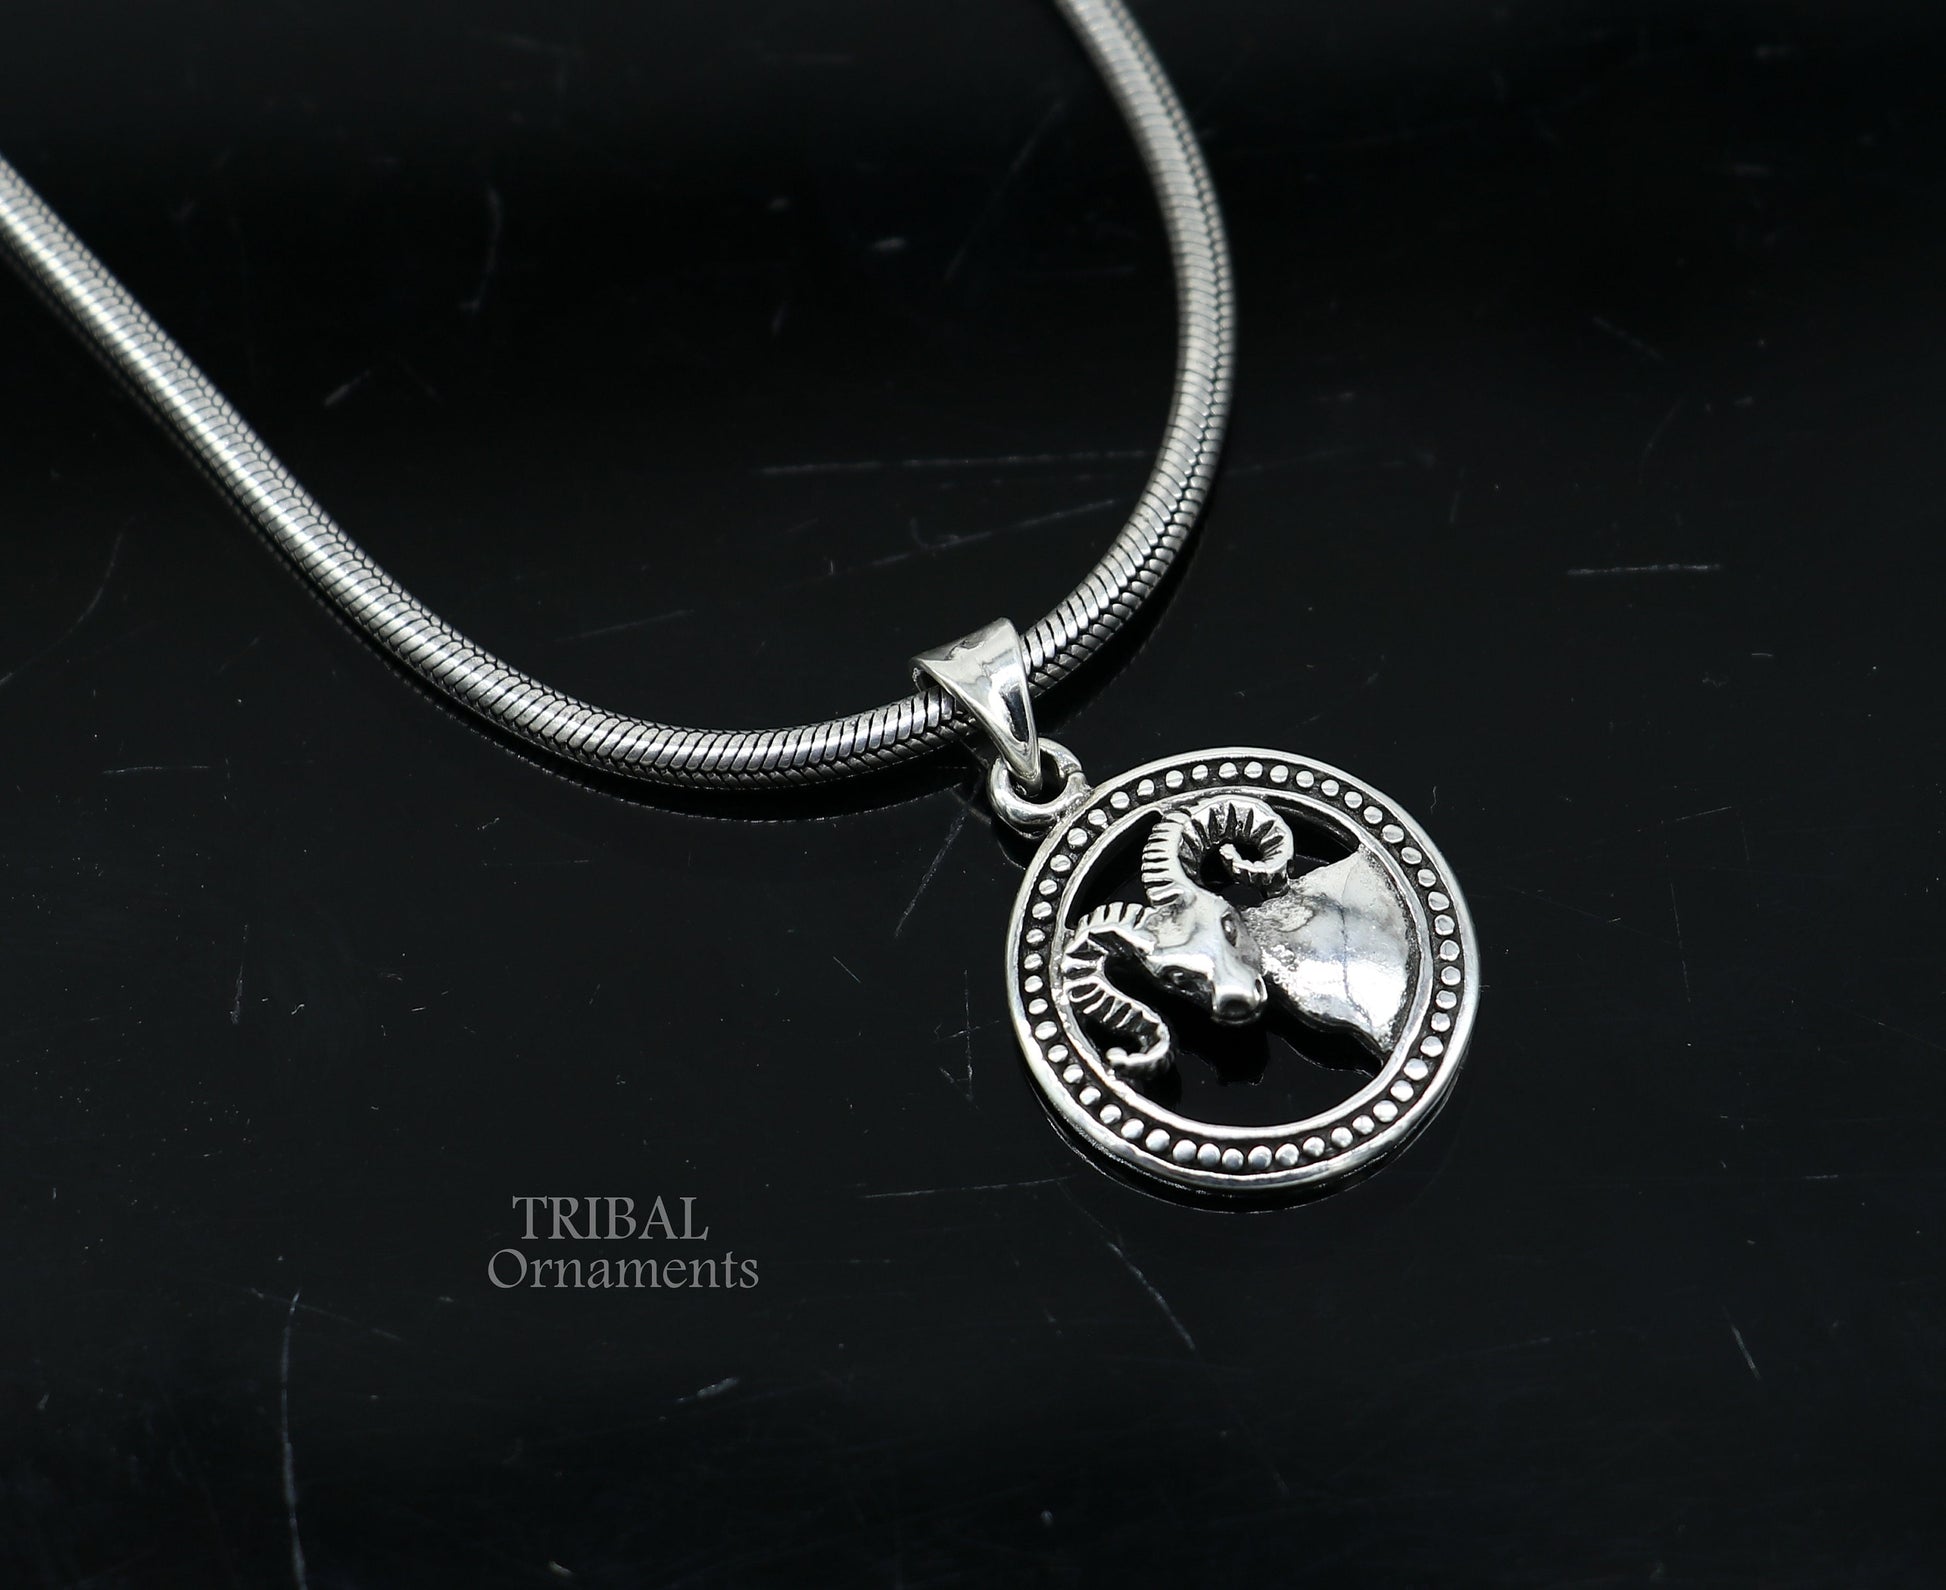 925 sterling silver unique Design horoscope zodiac Aries sign/symbol pendant unique Mesh Rashi symbol pendant best ethnic jewelry nsp574 - TRIBAL ORNAMENTS